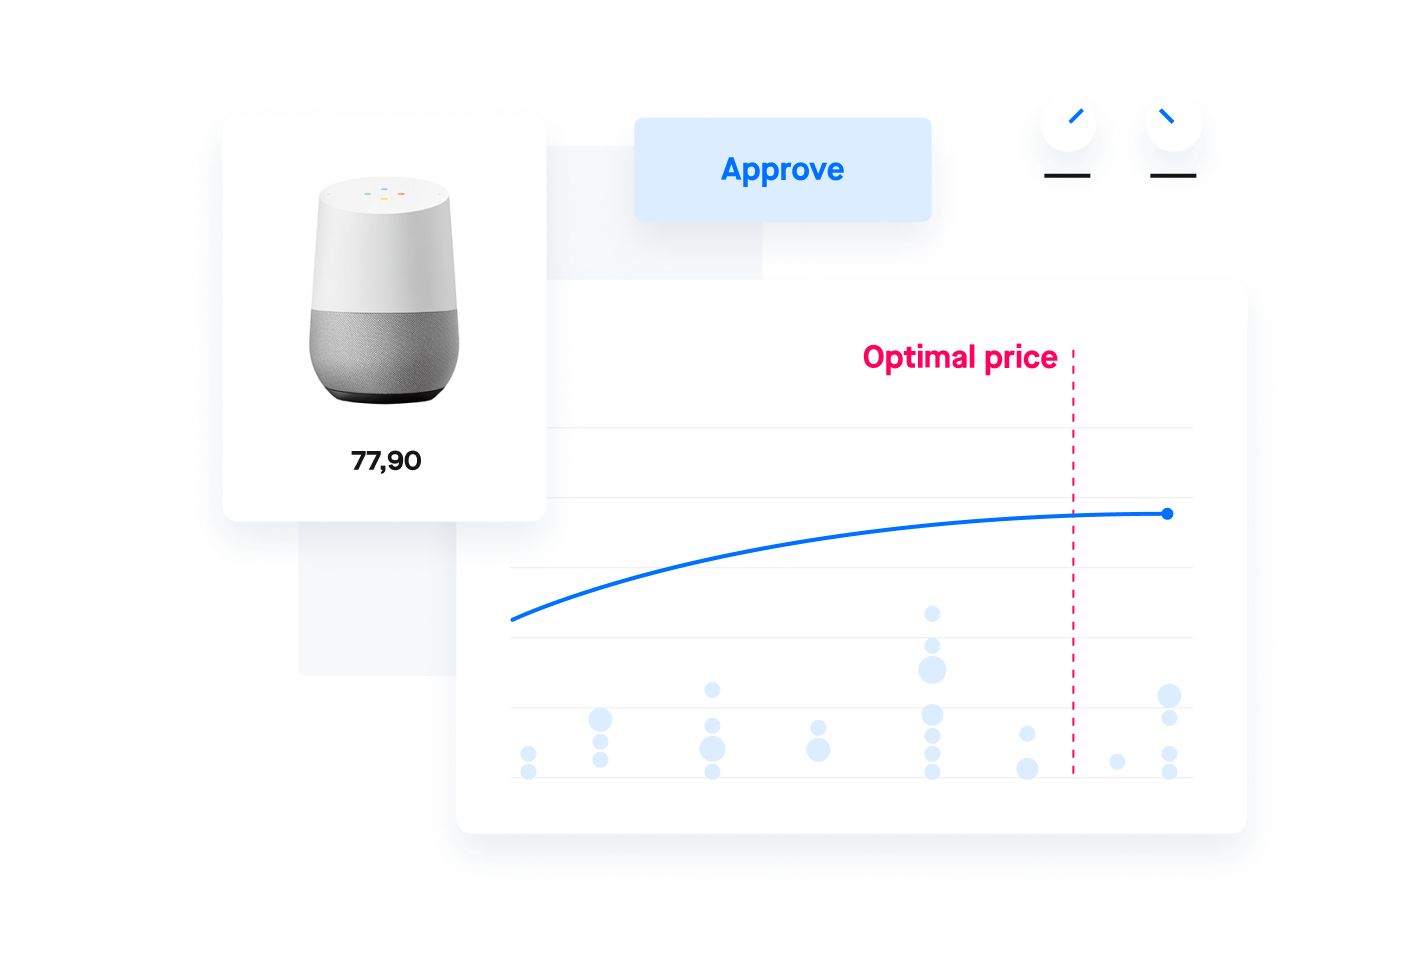 Reactev dynamic pricing based in artificial intelligence